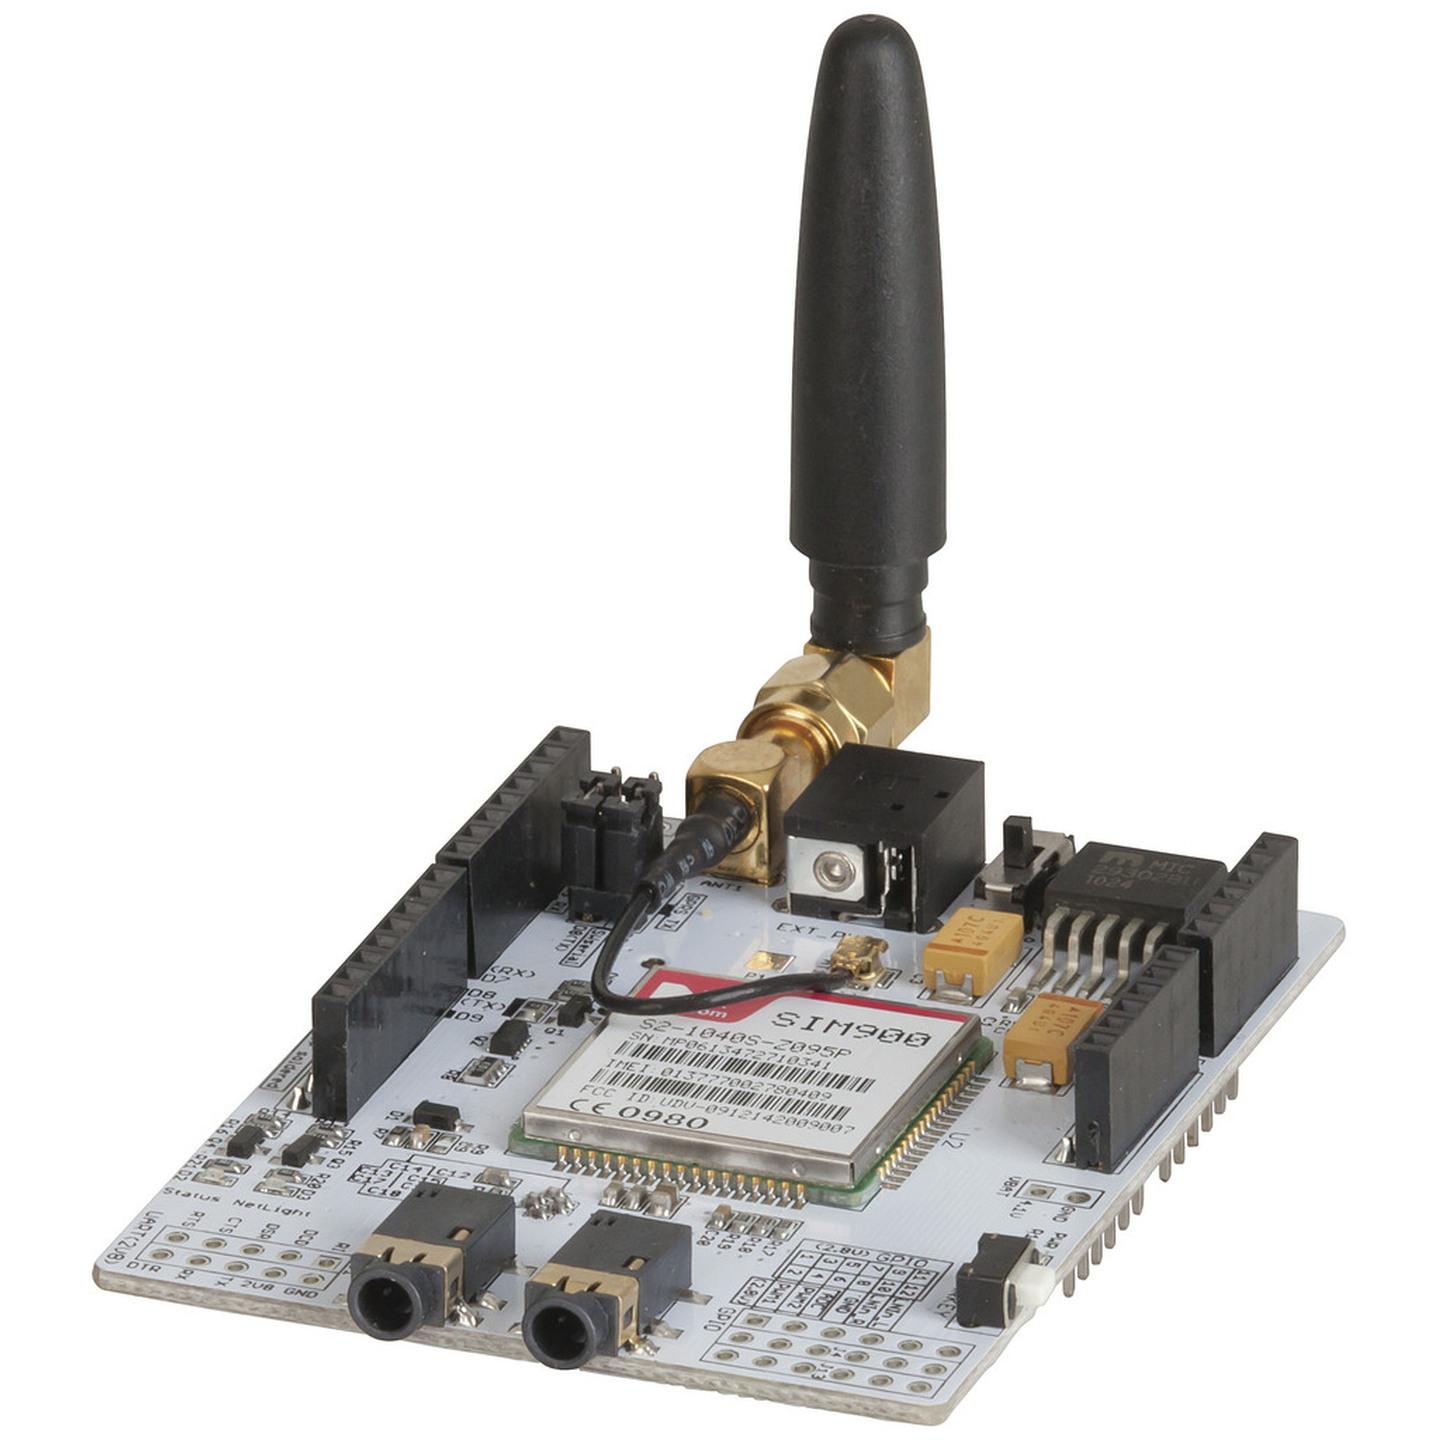 GPRS/GSM Shield for Arduino